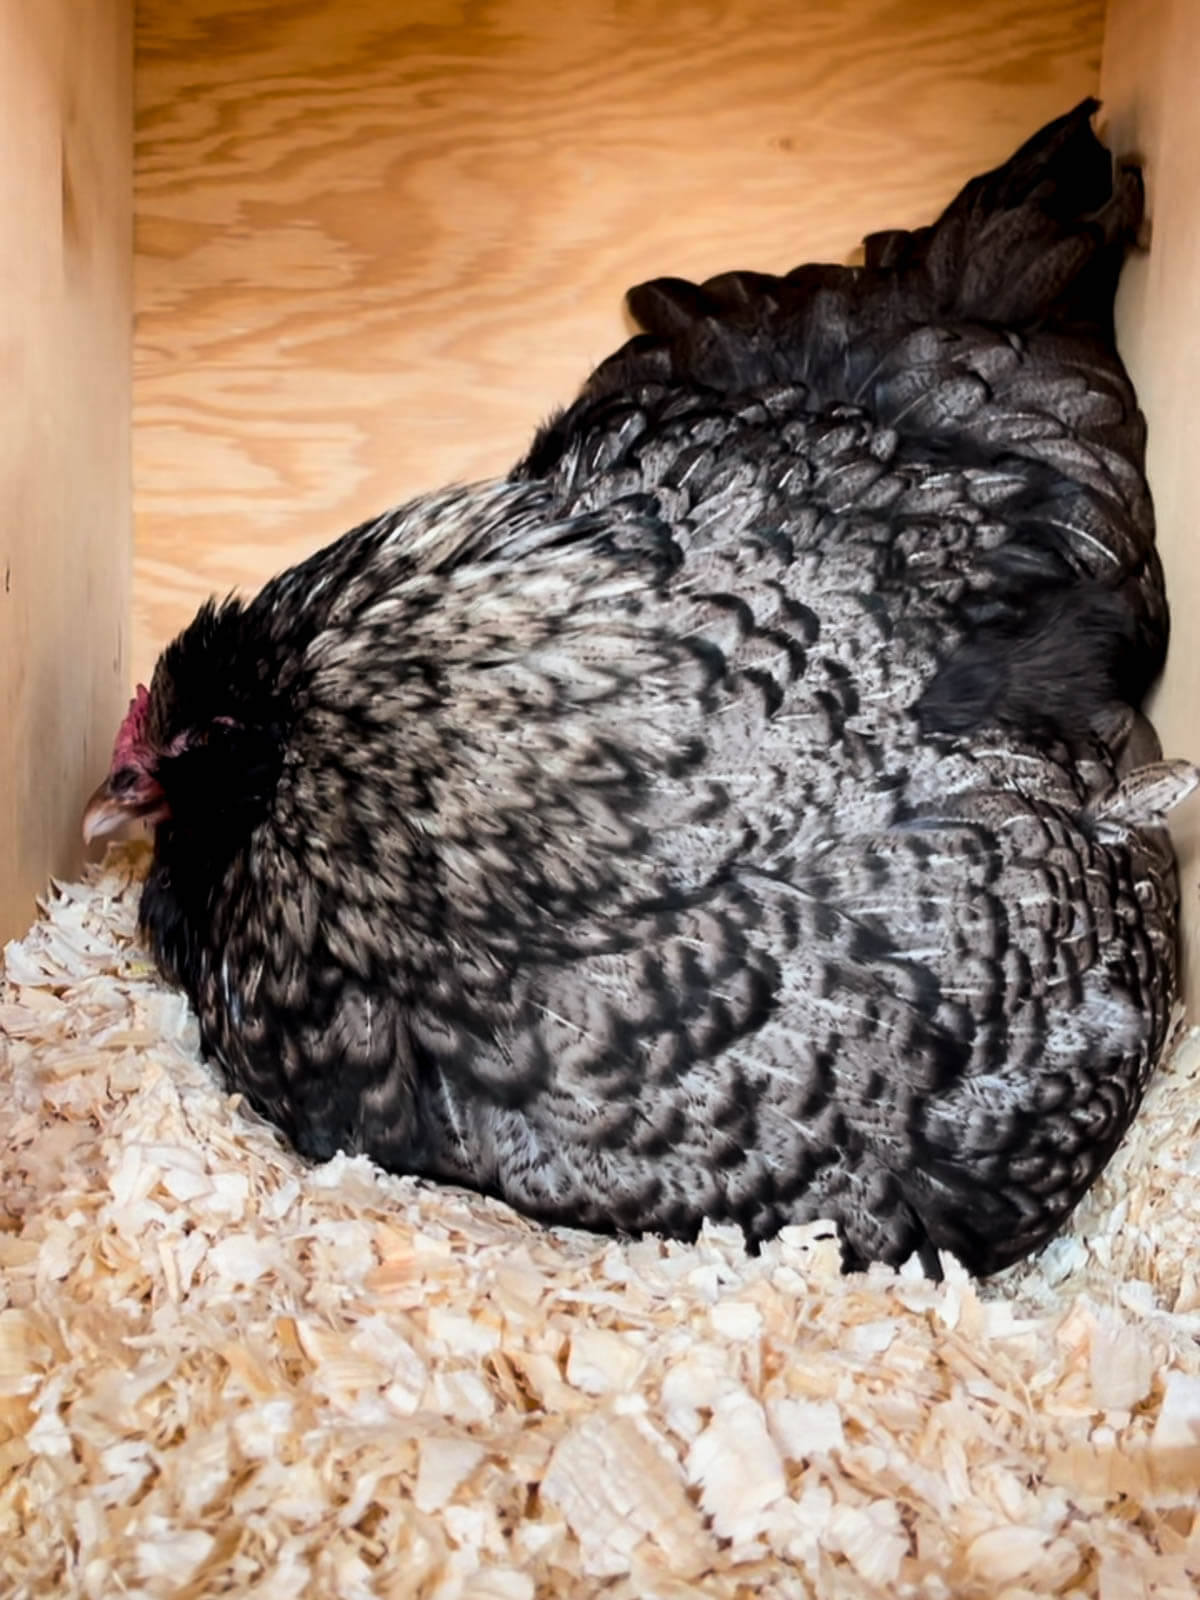 Broody hen in nesting box. 